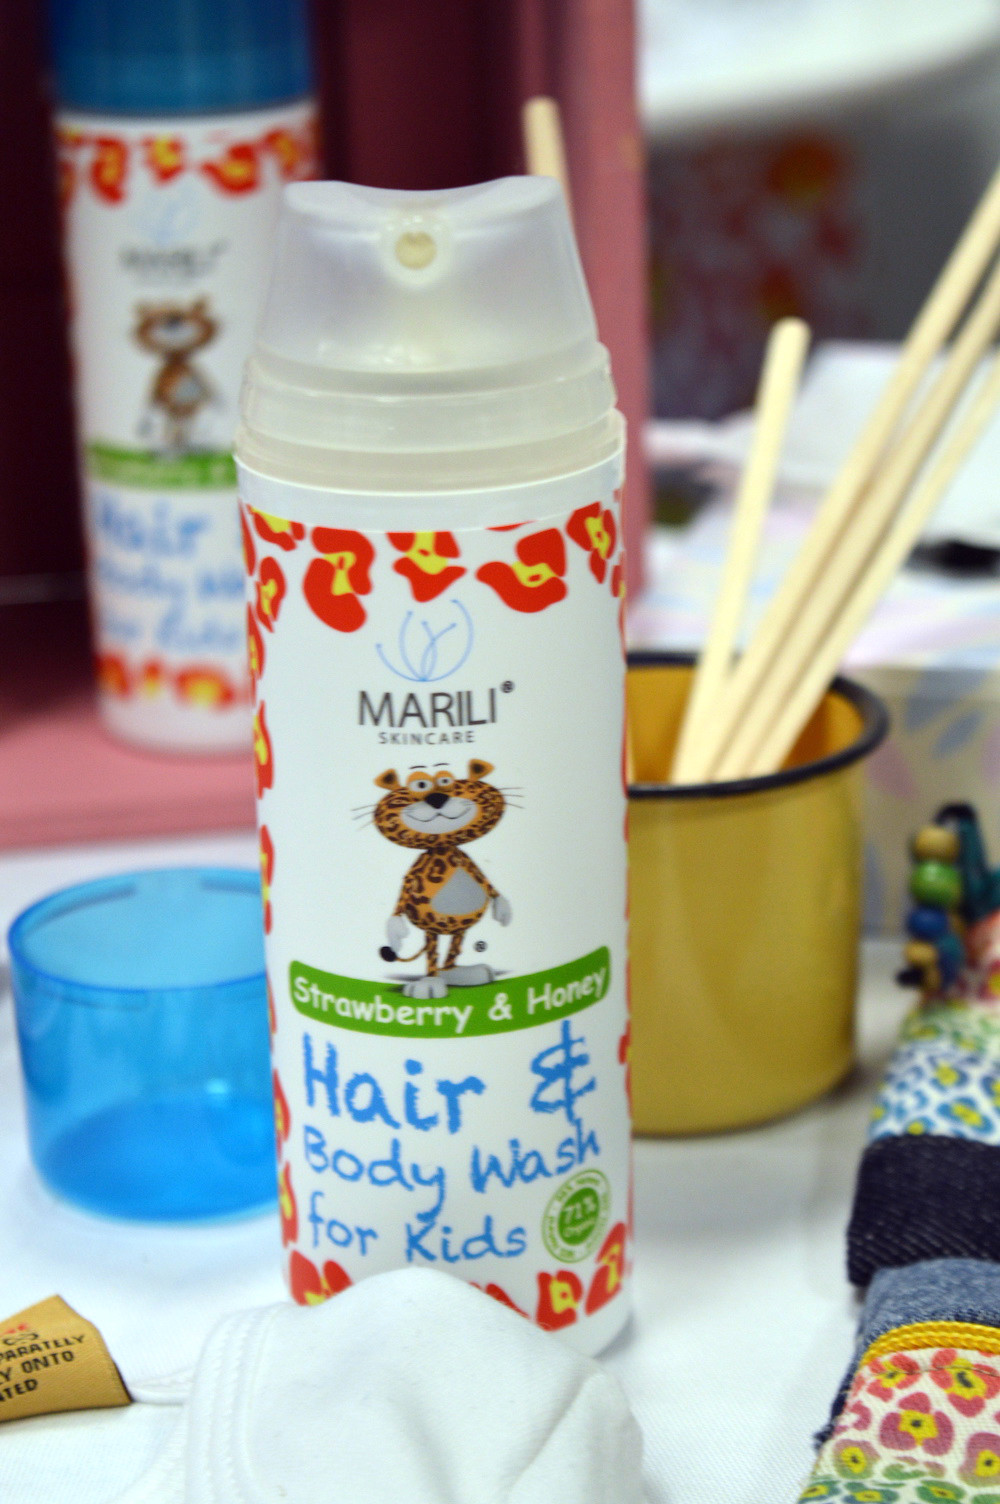 Marili Hair and Body Wash